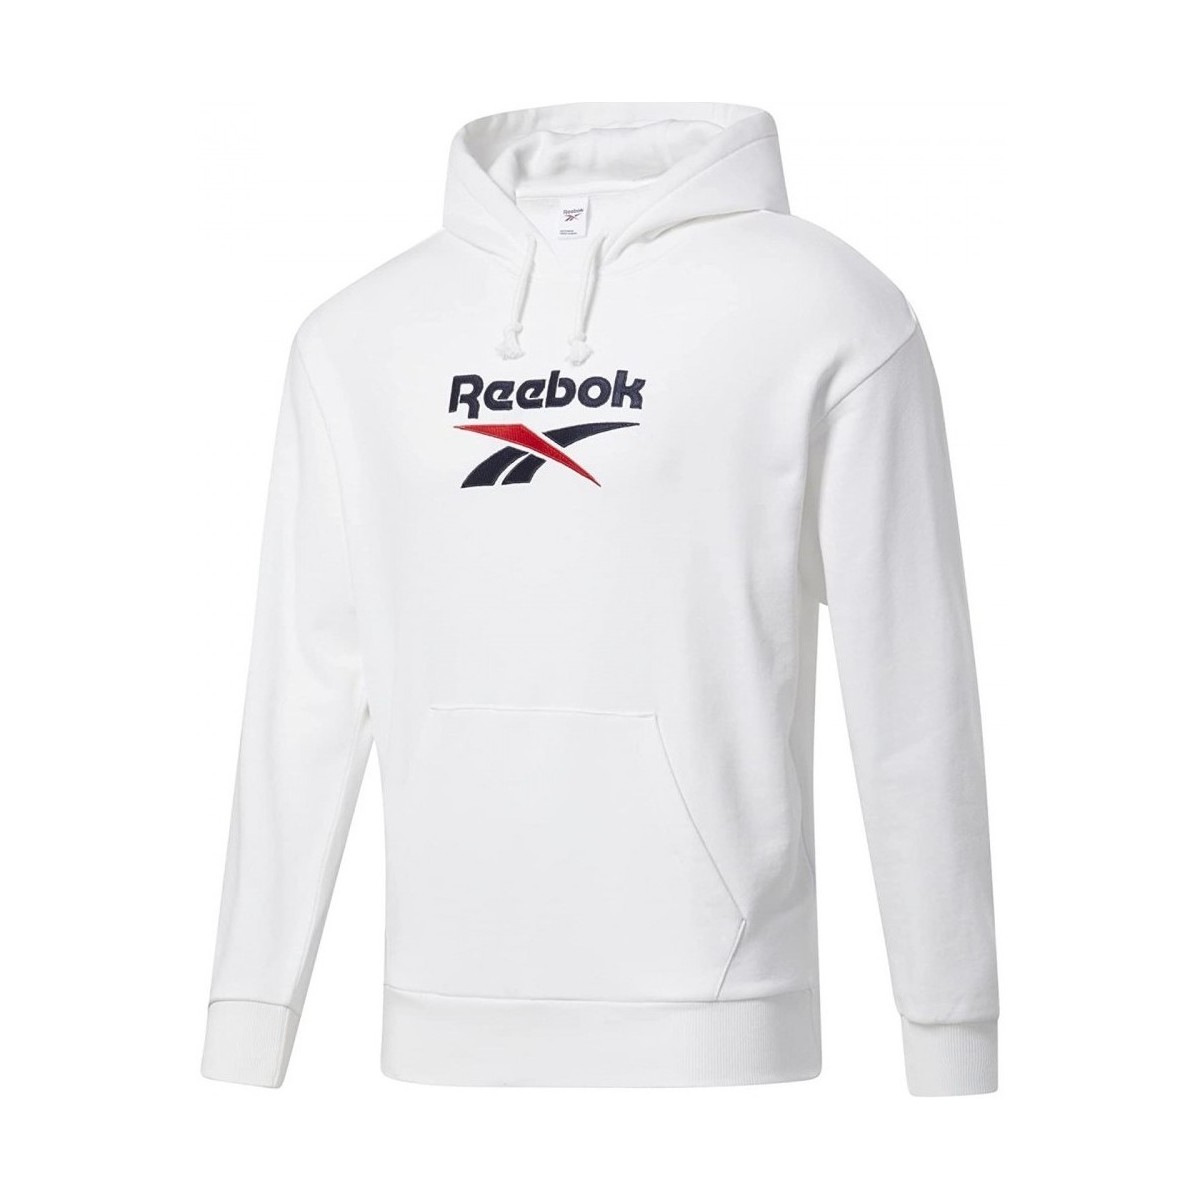 Textil Sweats Reebok Sport Cl F Vector Hoodie Branco